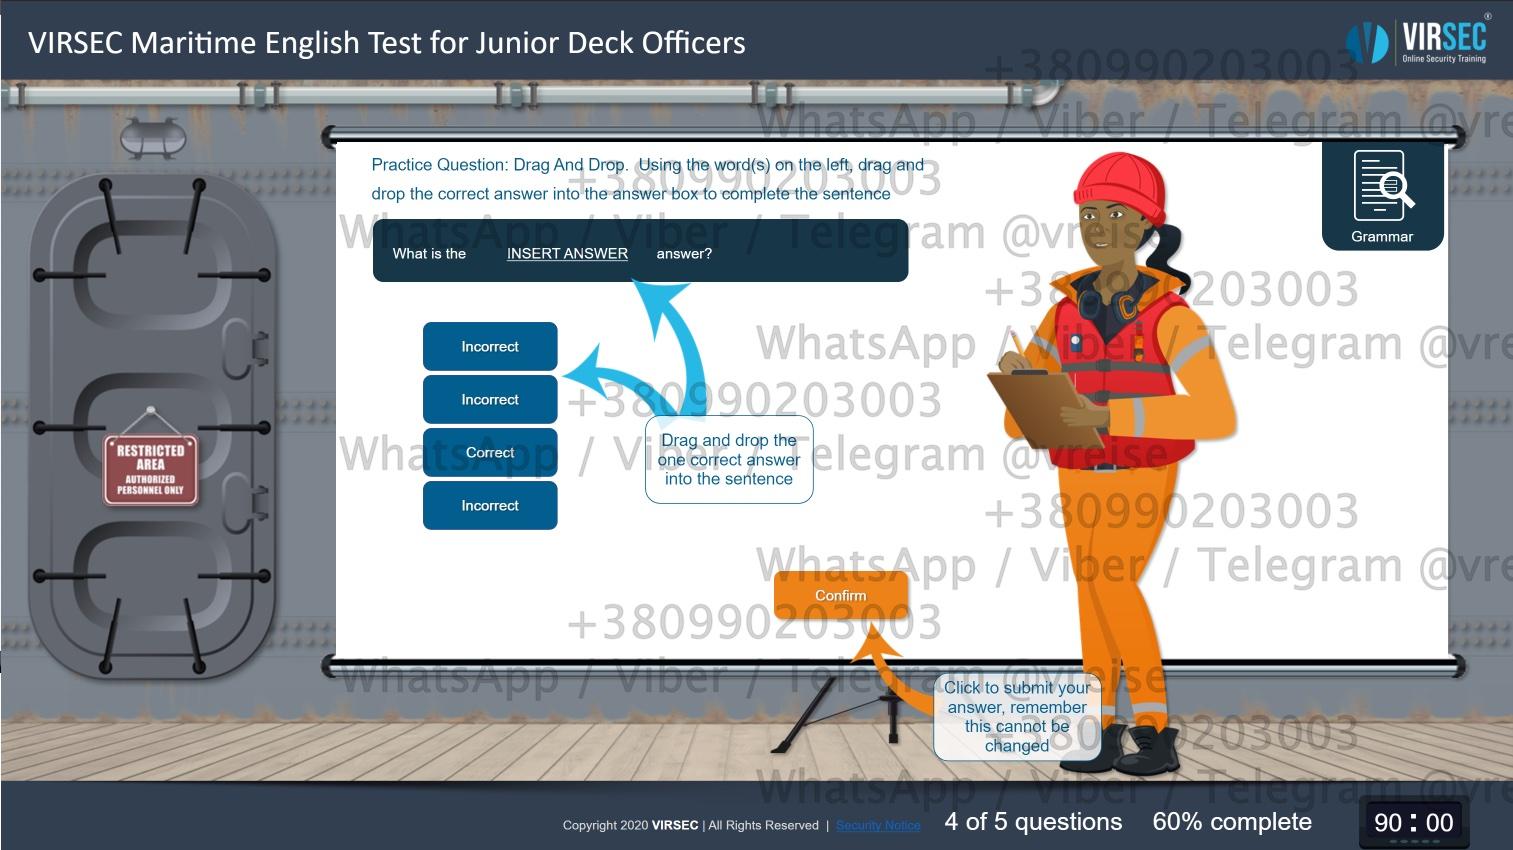 BSM VIRSEC Maritime English Test Junior Deck Officers answers, ответы